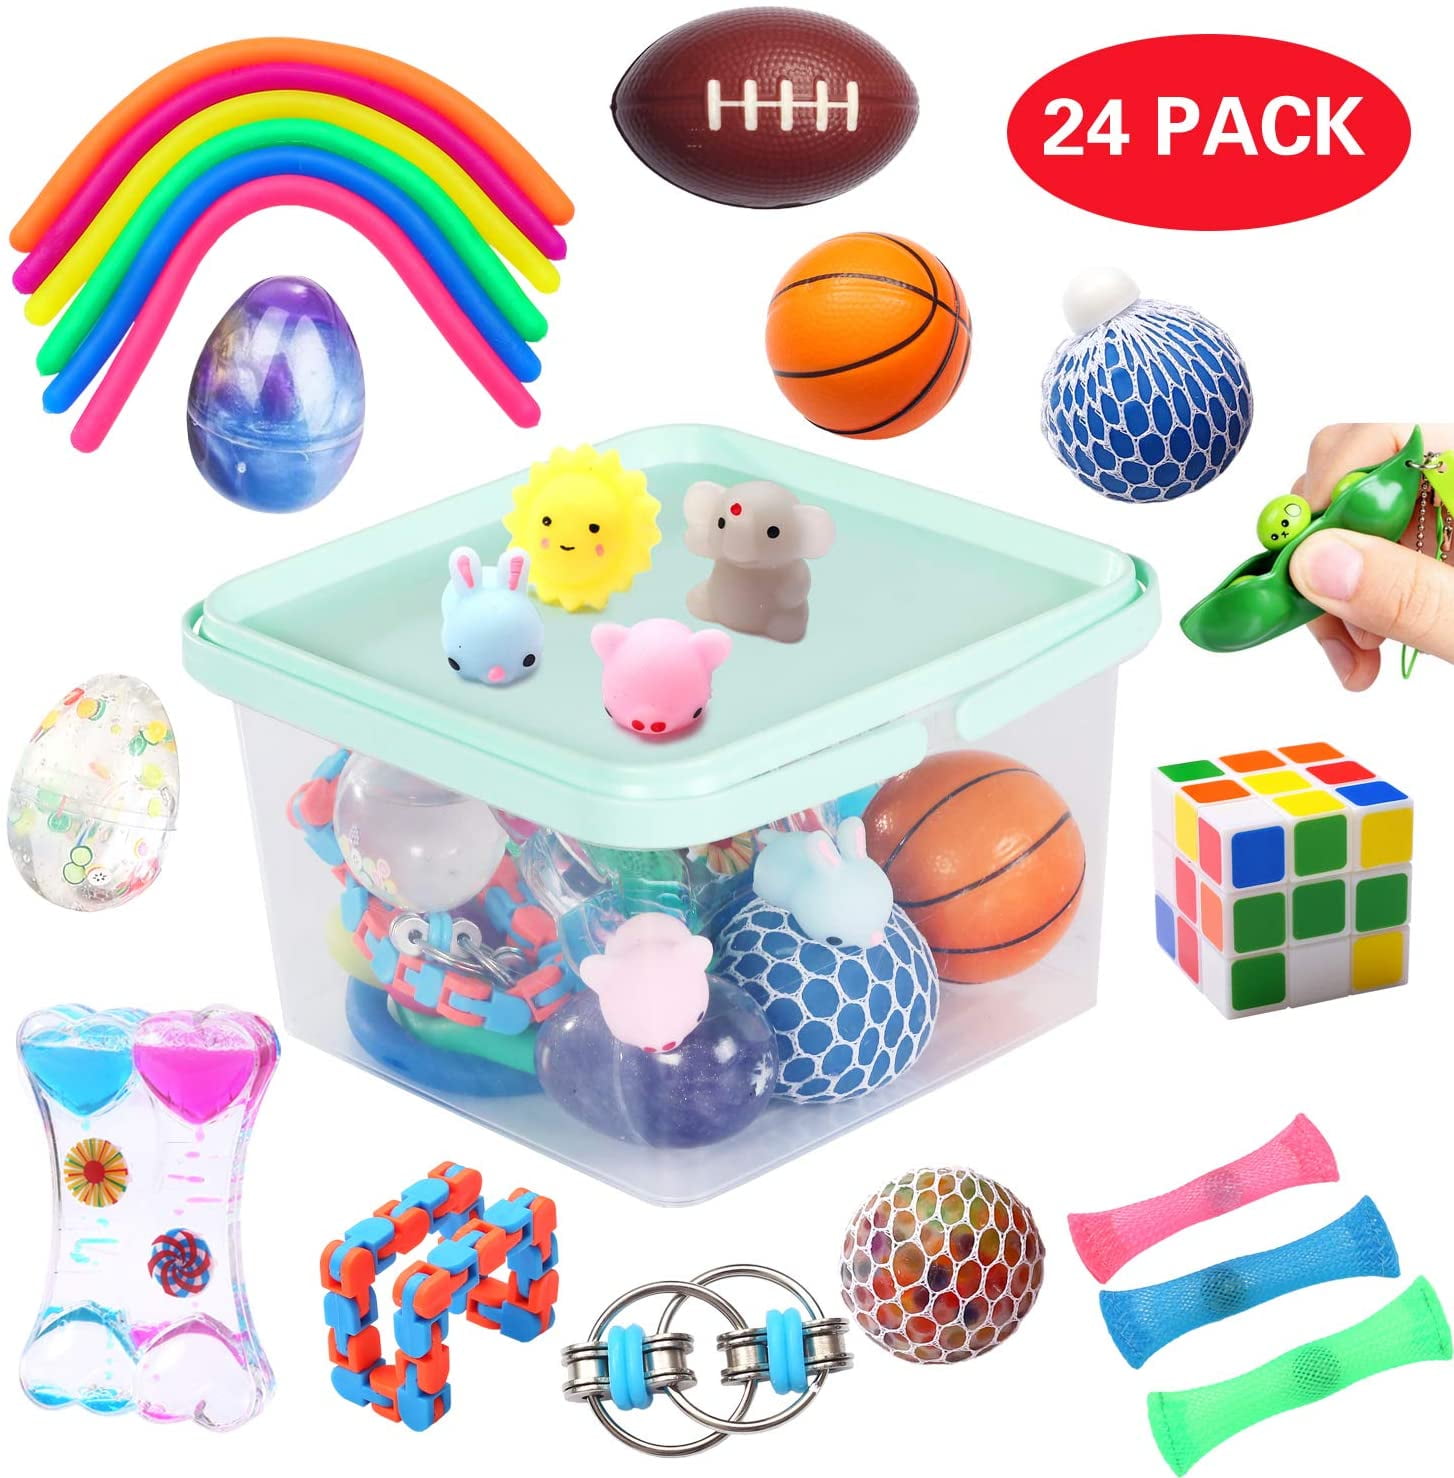 24 Pack Sensory Fidget Toys Set Autistic Kids Adult ADHD Anti Stress Play Toys 